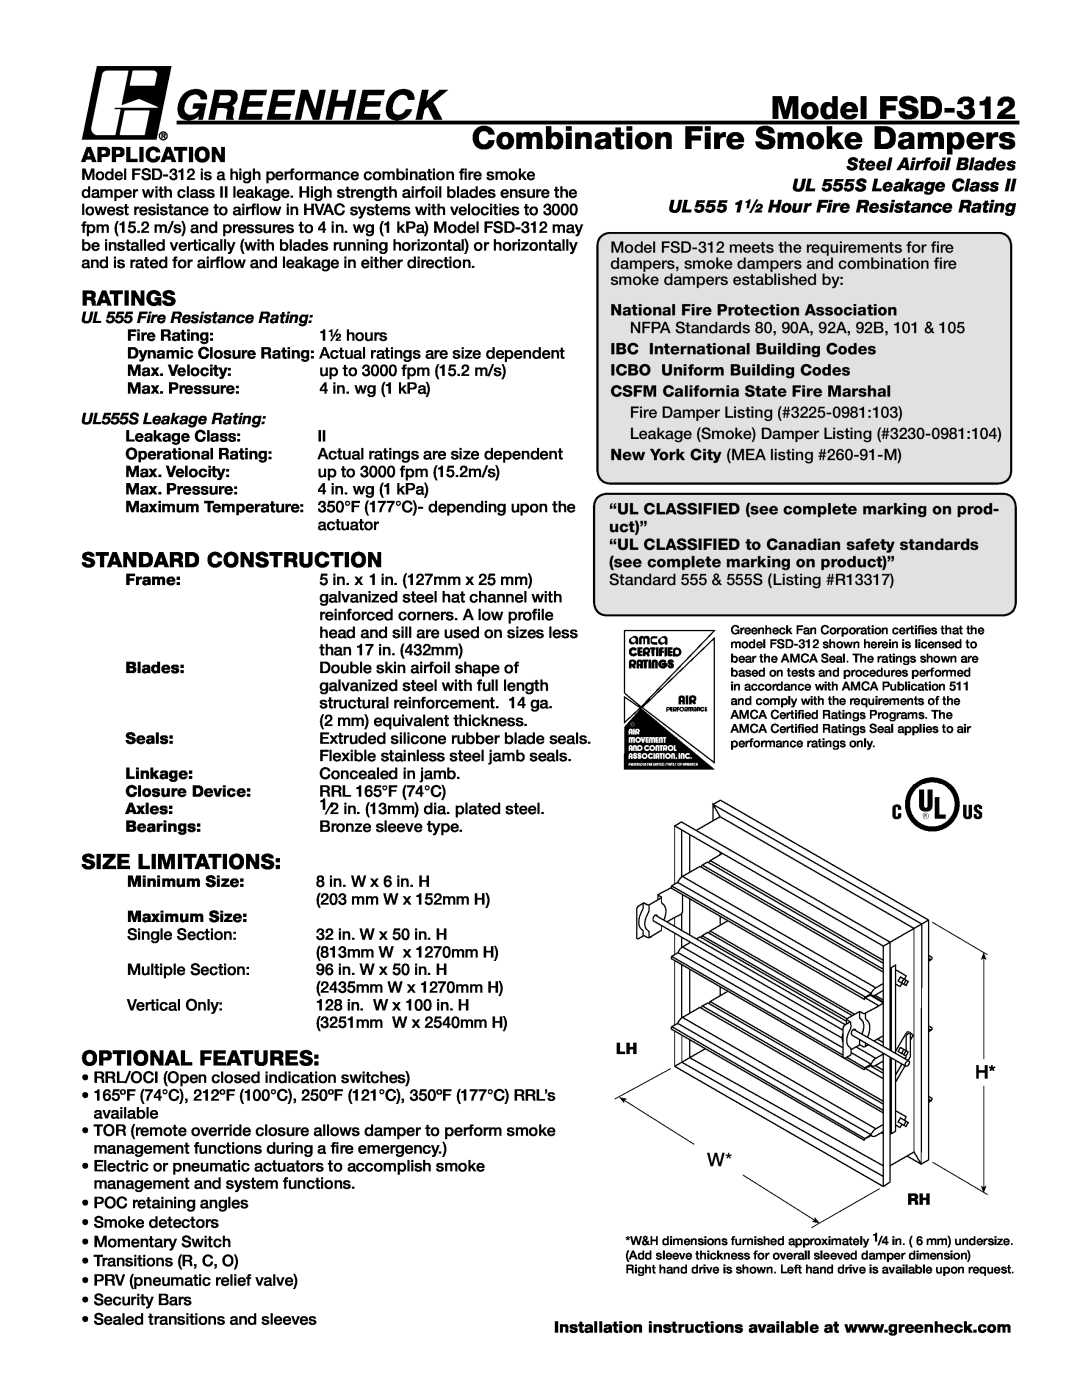 Greenheck Fan dimensions Model FSD-312, Combination Fire Smoke Dampers, Application, Ratings, Standard Construction 